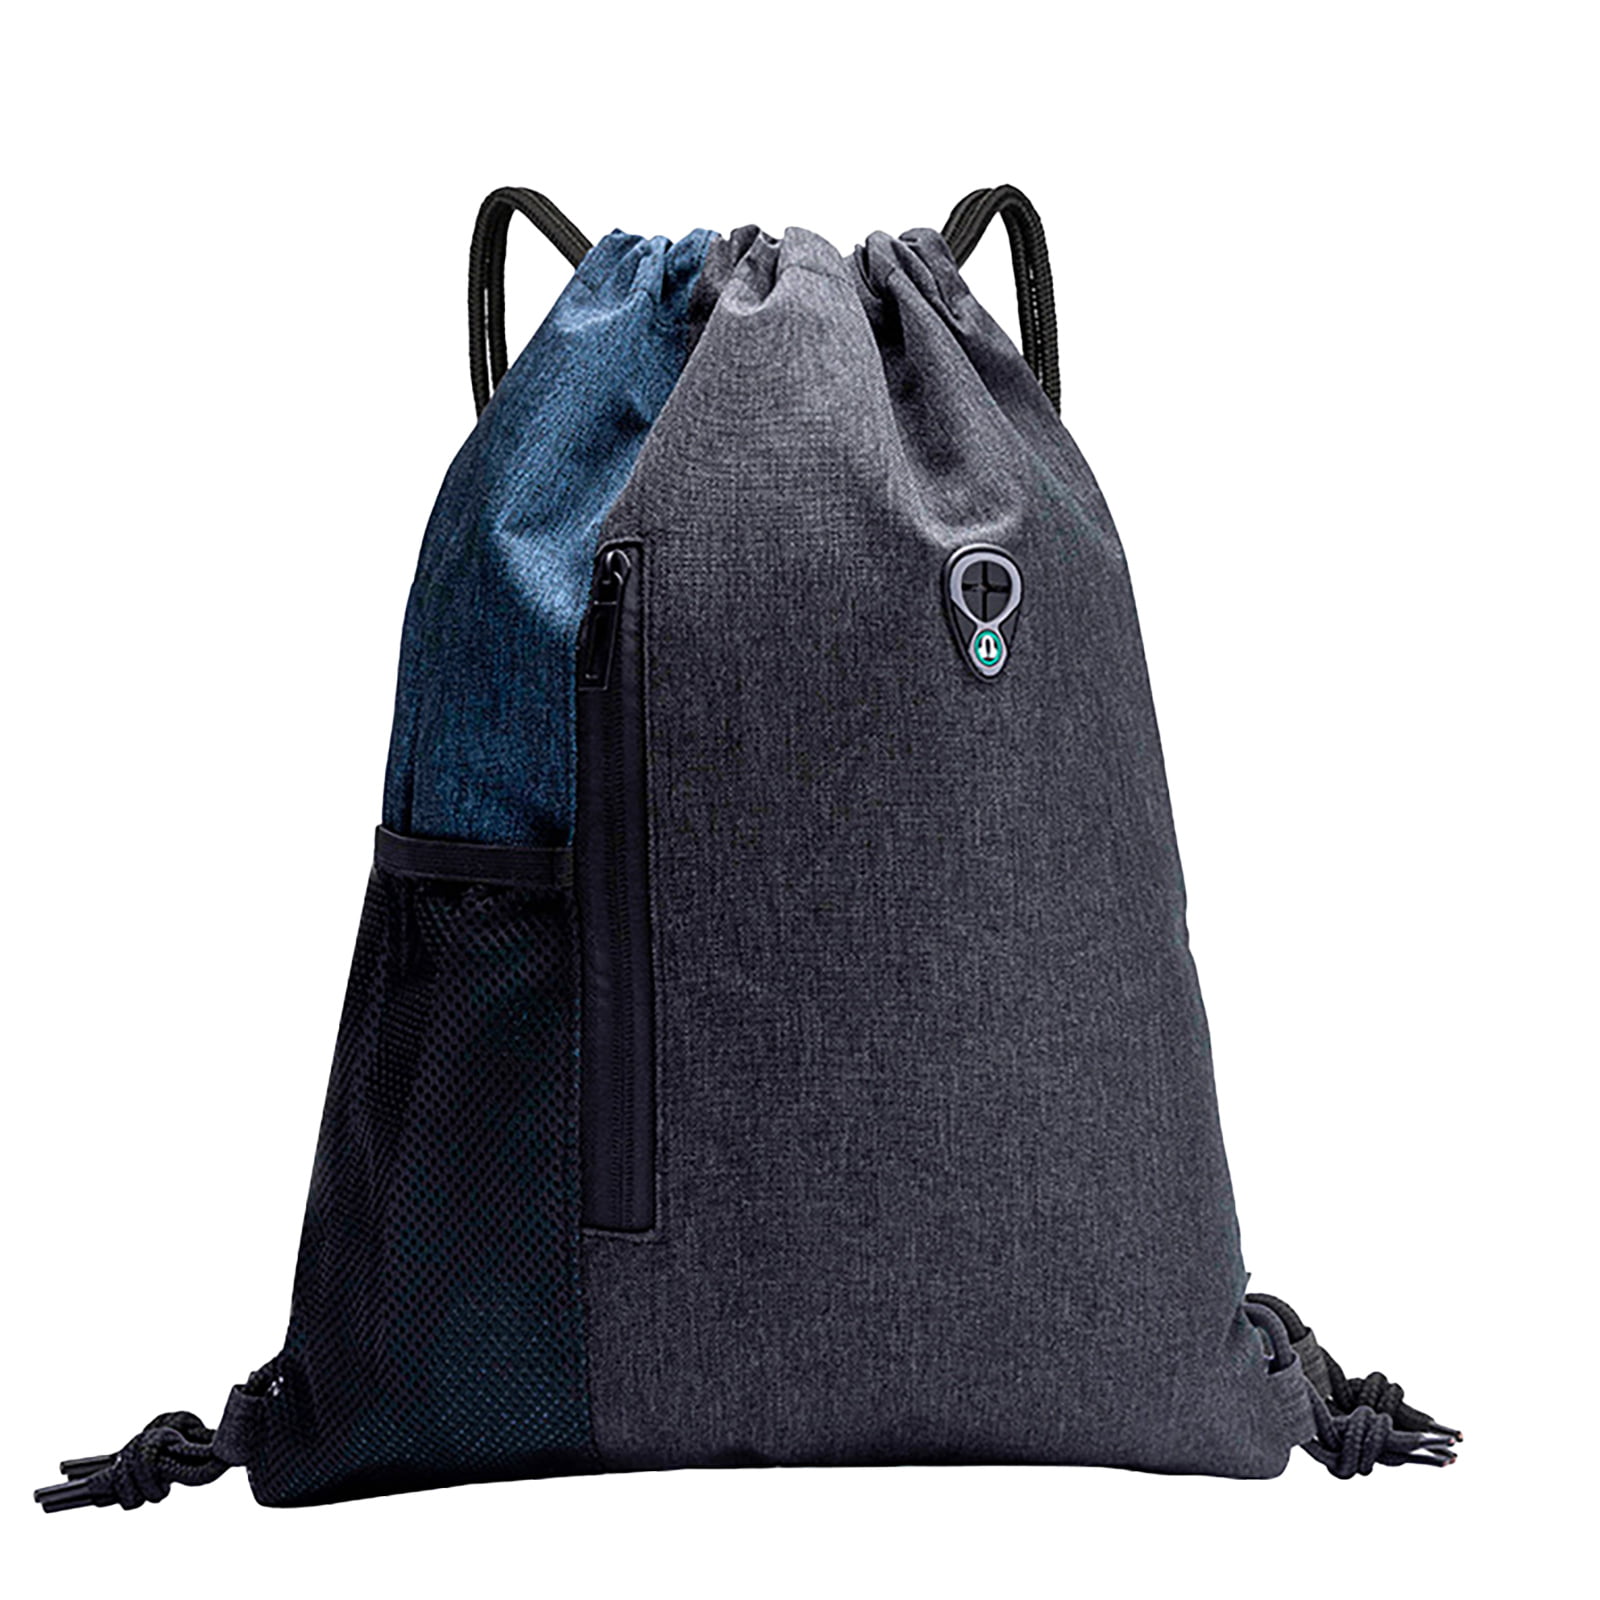 Nitouy Gym Sack Drawstring Bag - Waterproof Nylon Sports Drawstring Bag - Walmart.com